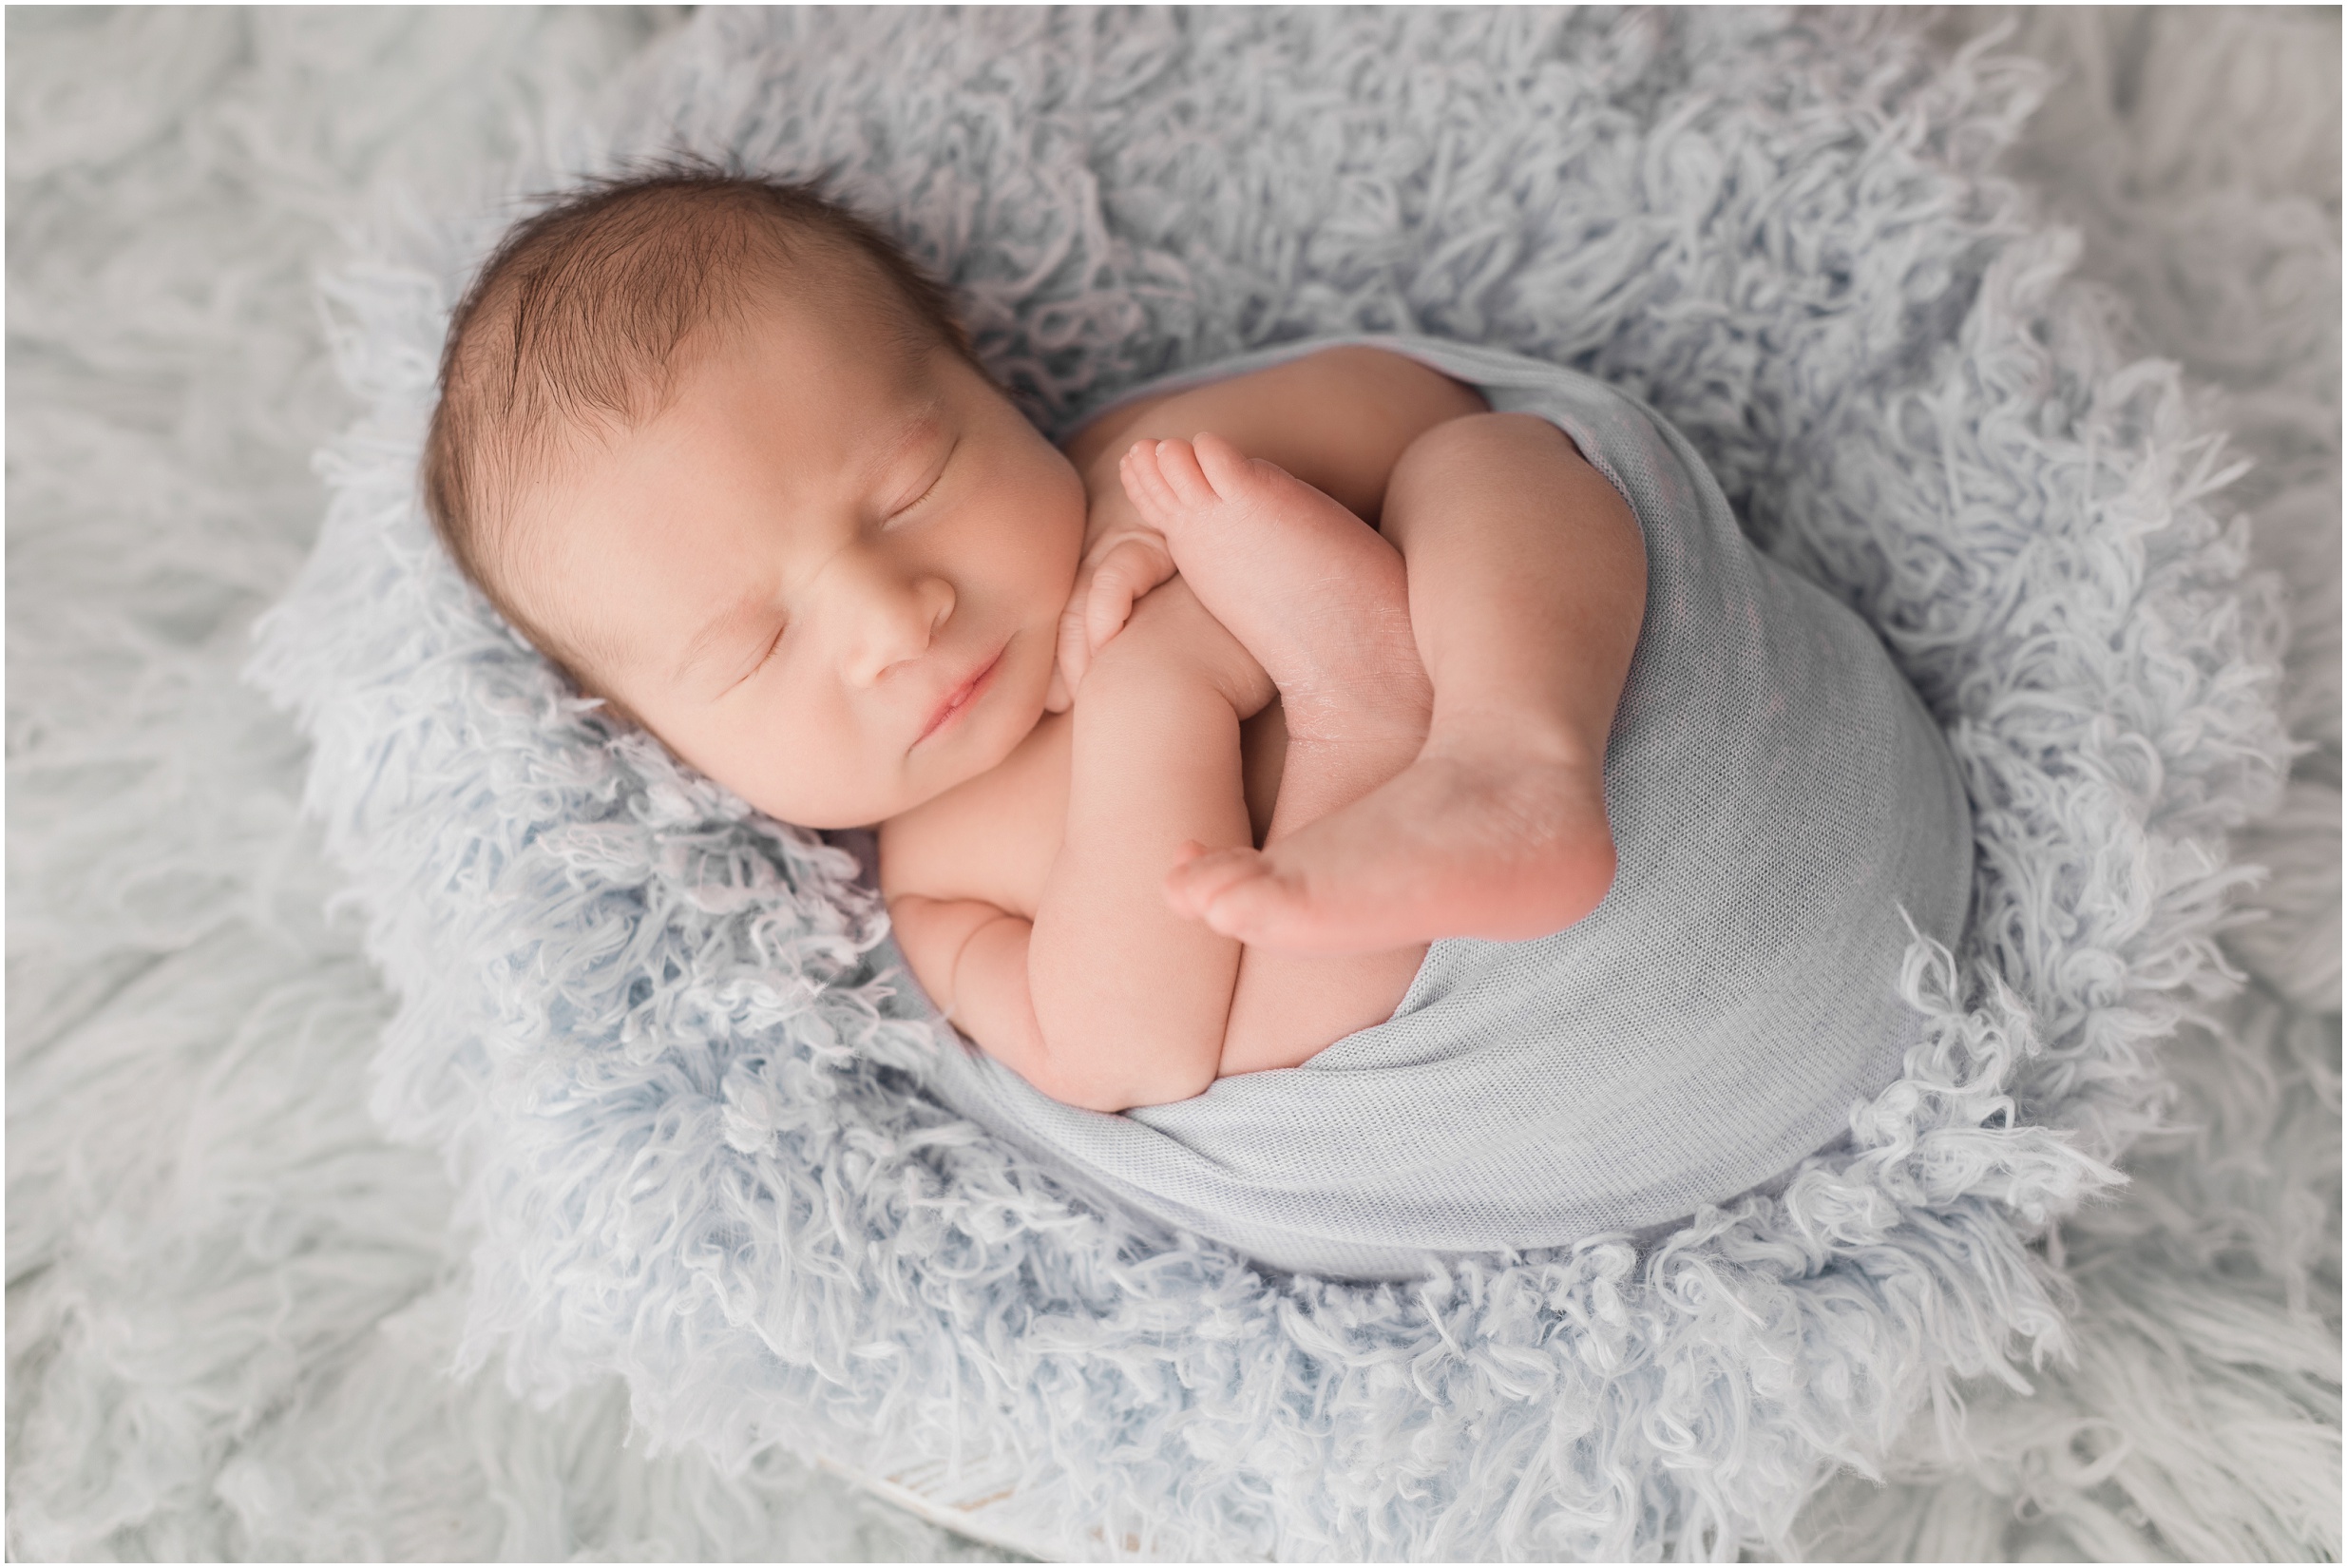 edmonton newborn photographer, nc photography, st albert newborn photographer, edmonton newborn photographers